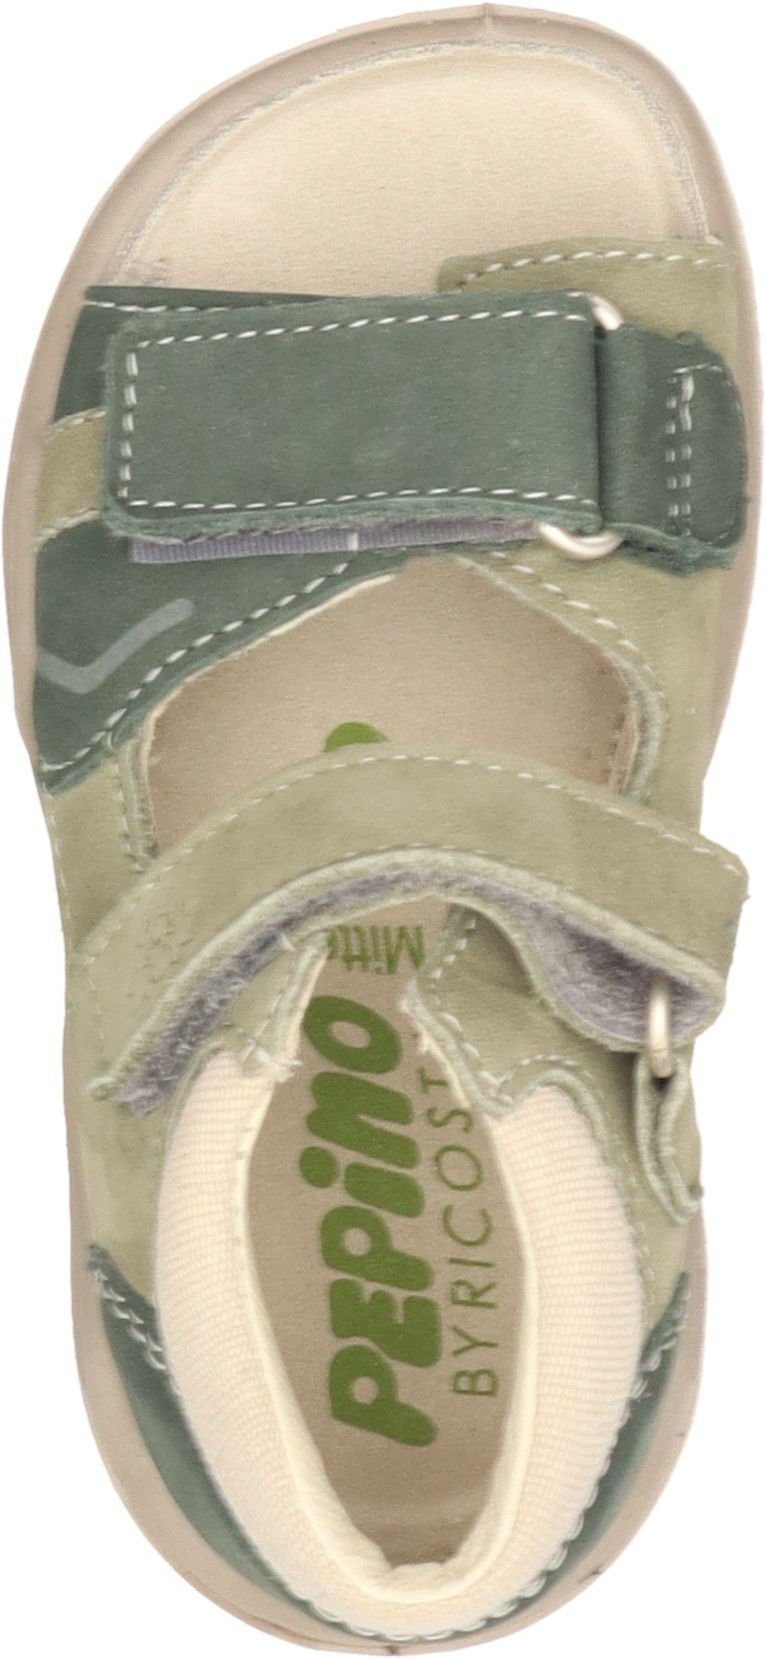 Pepino Sandaletten aus Outdoorsandale hellgrün Textil